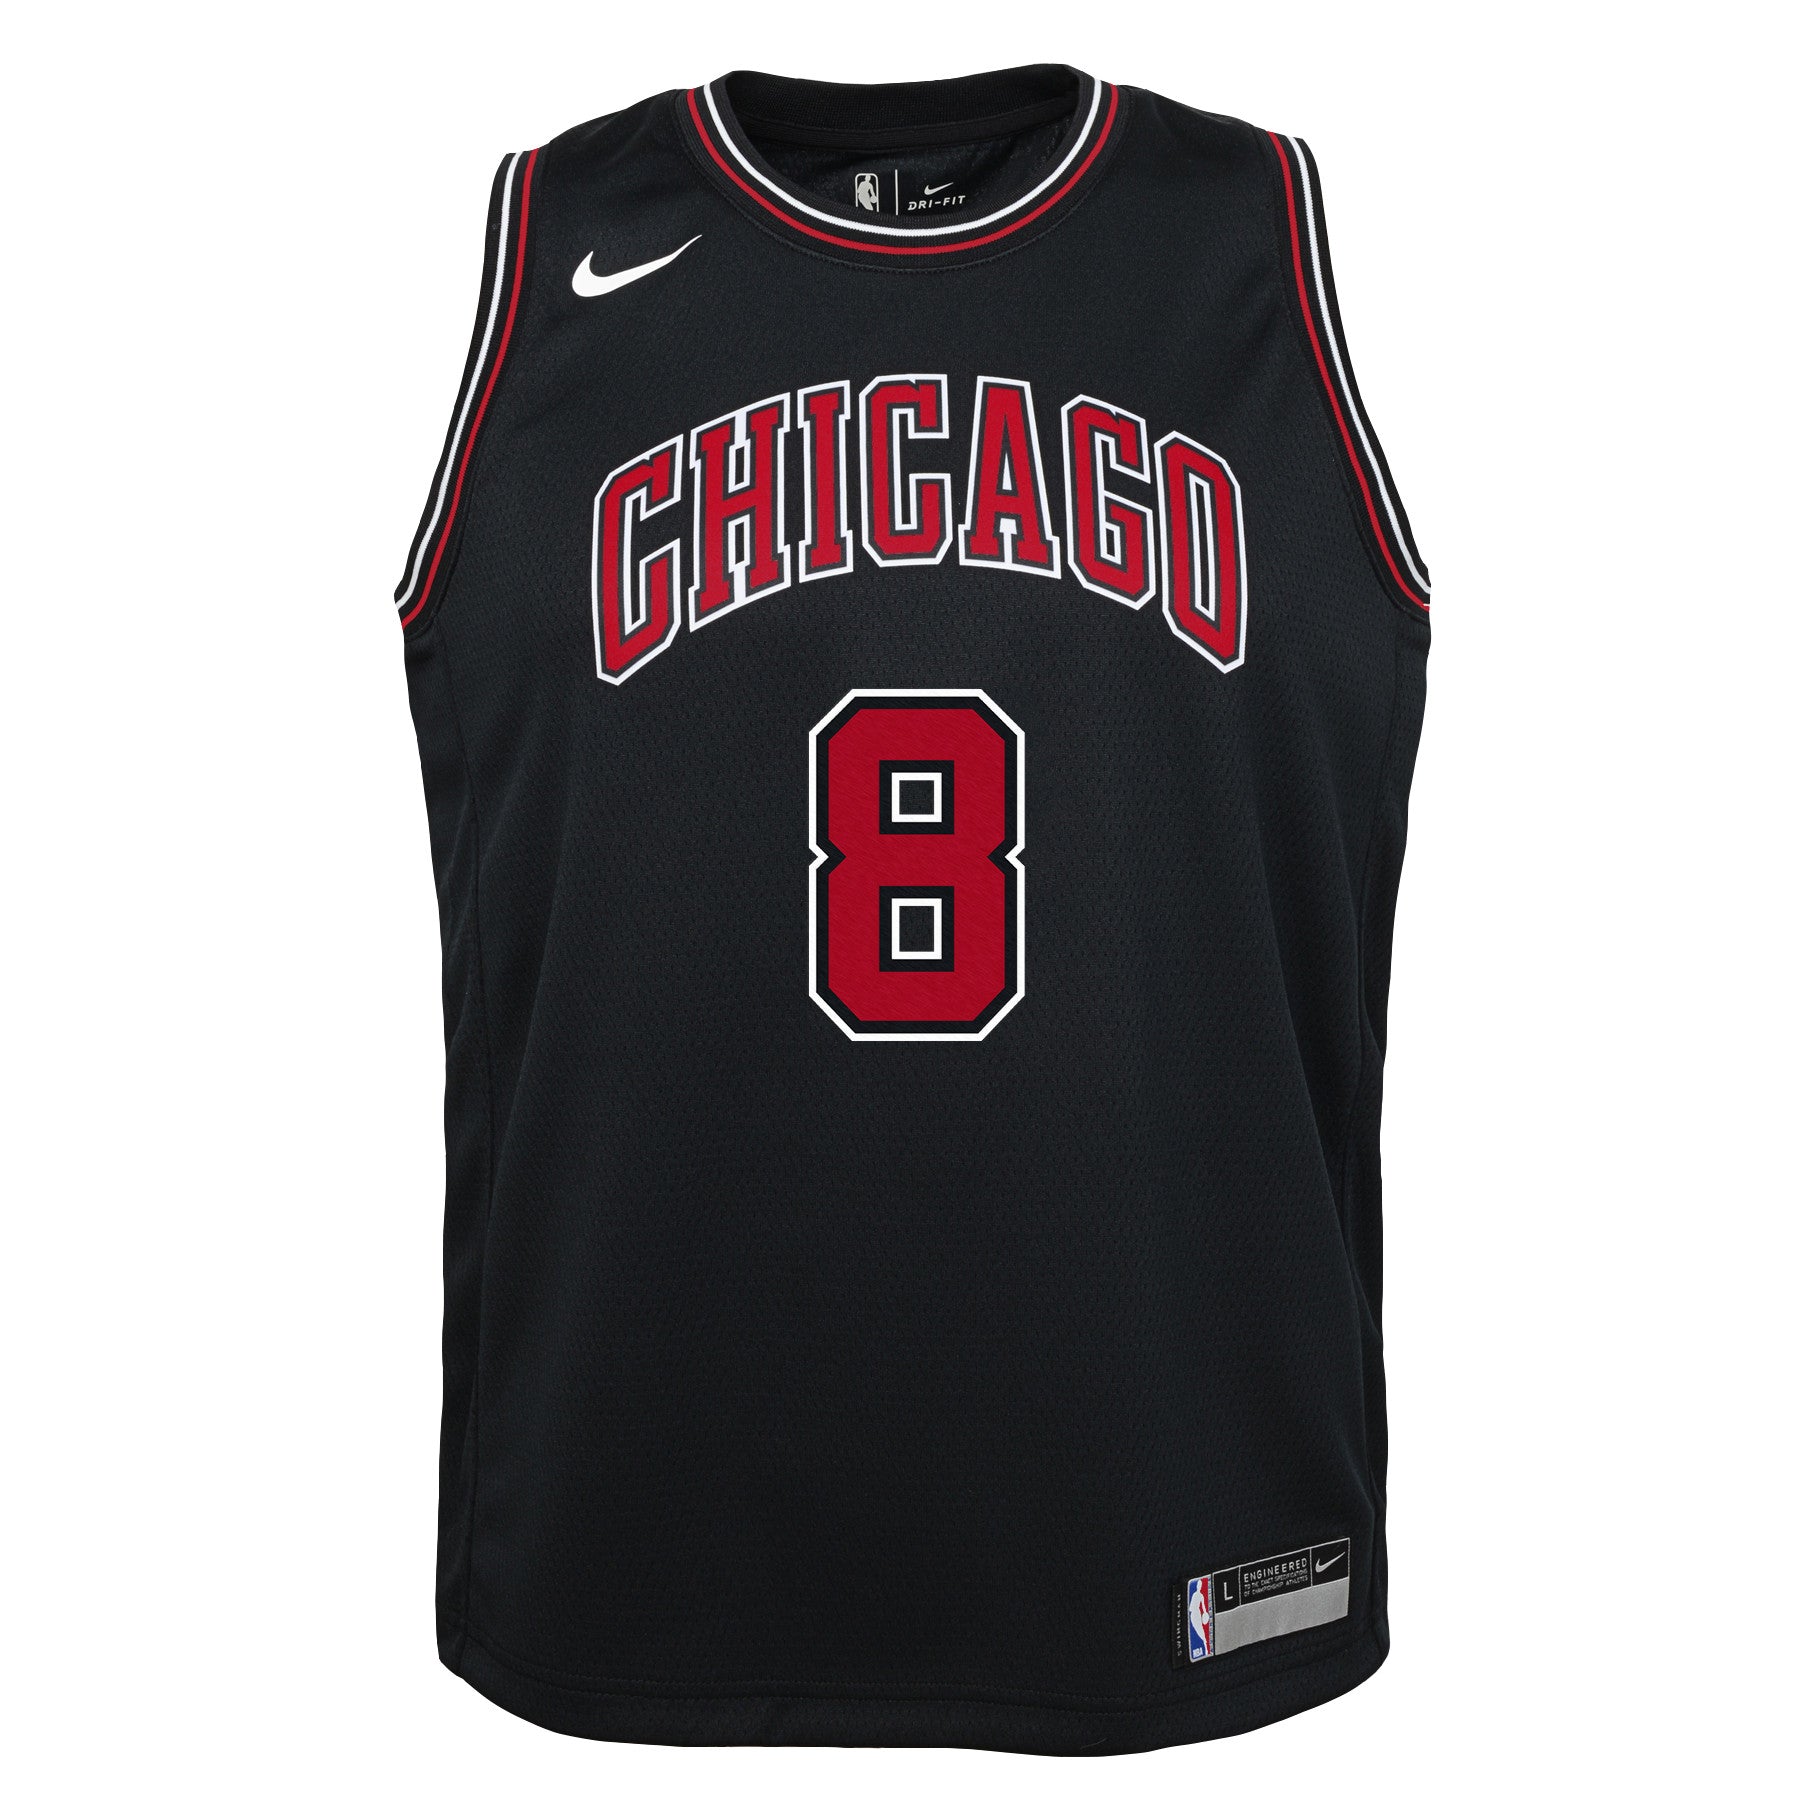 2018 chicago bulls jersey